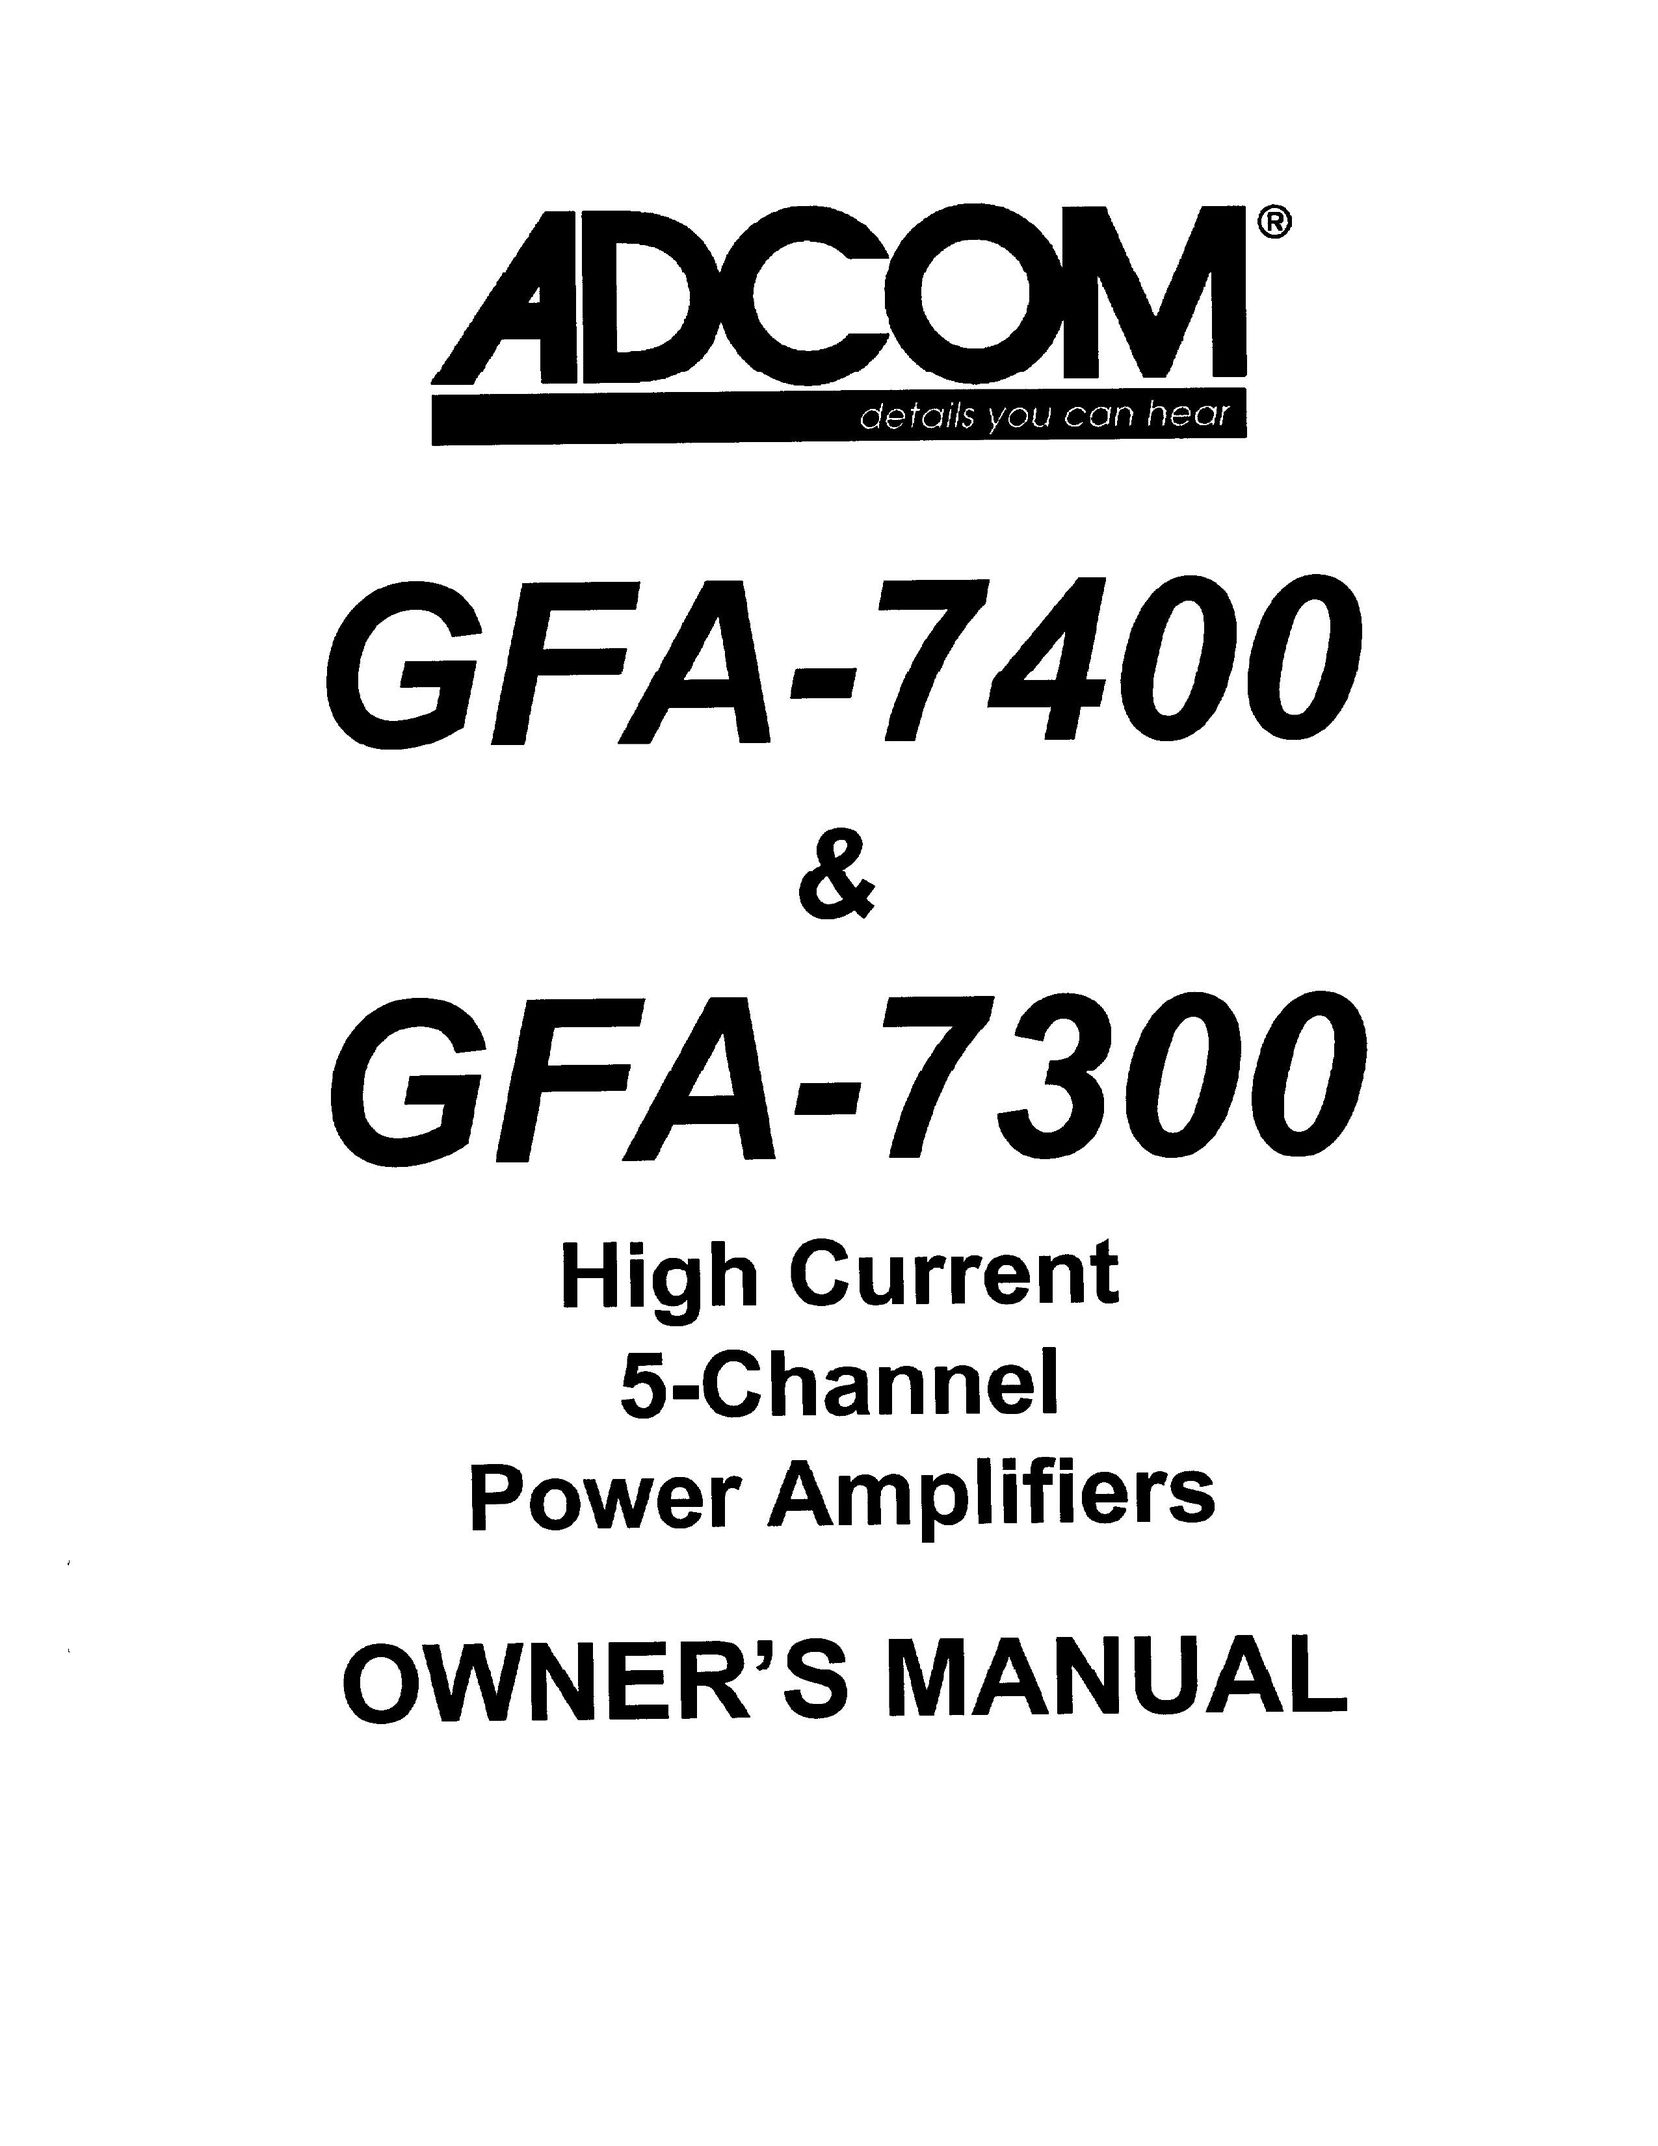 Adcom GFA-7300 Stereo Amplifier User Manual